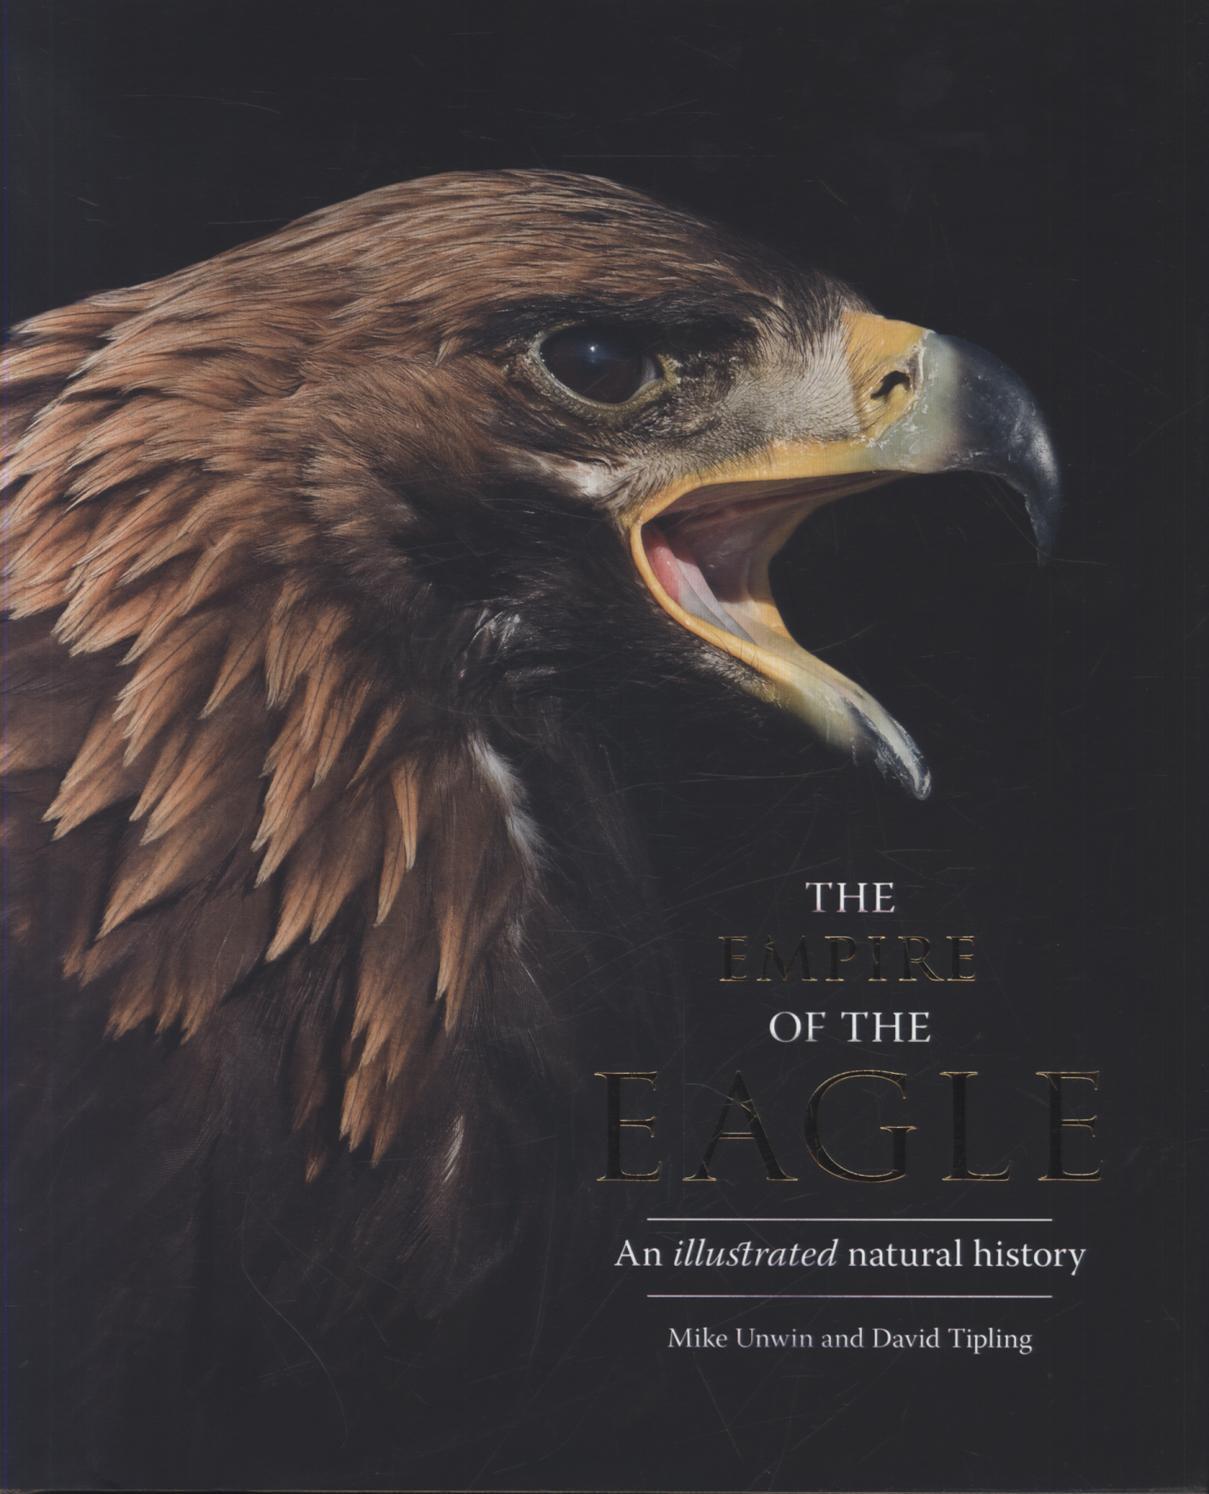 Empire of the Eagle